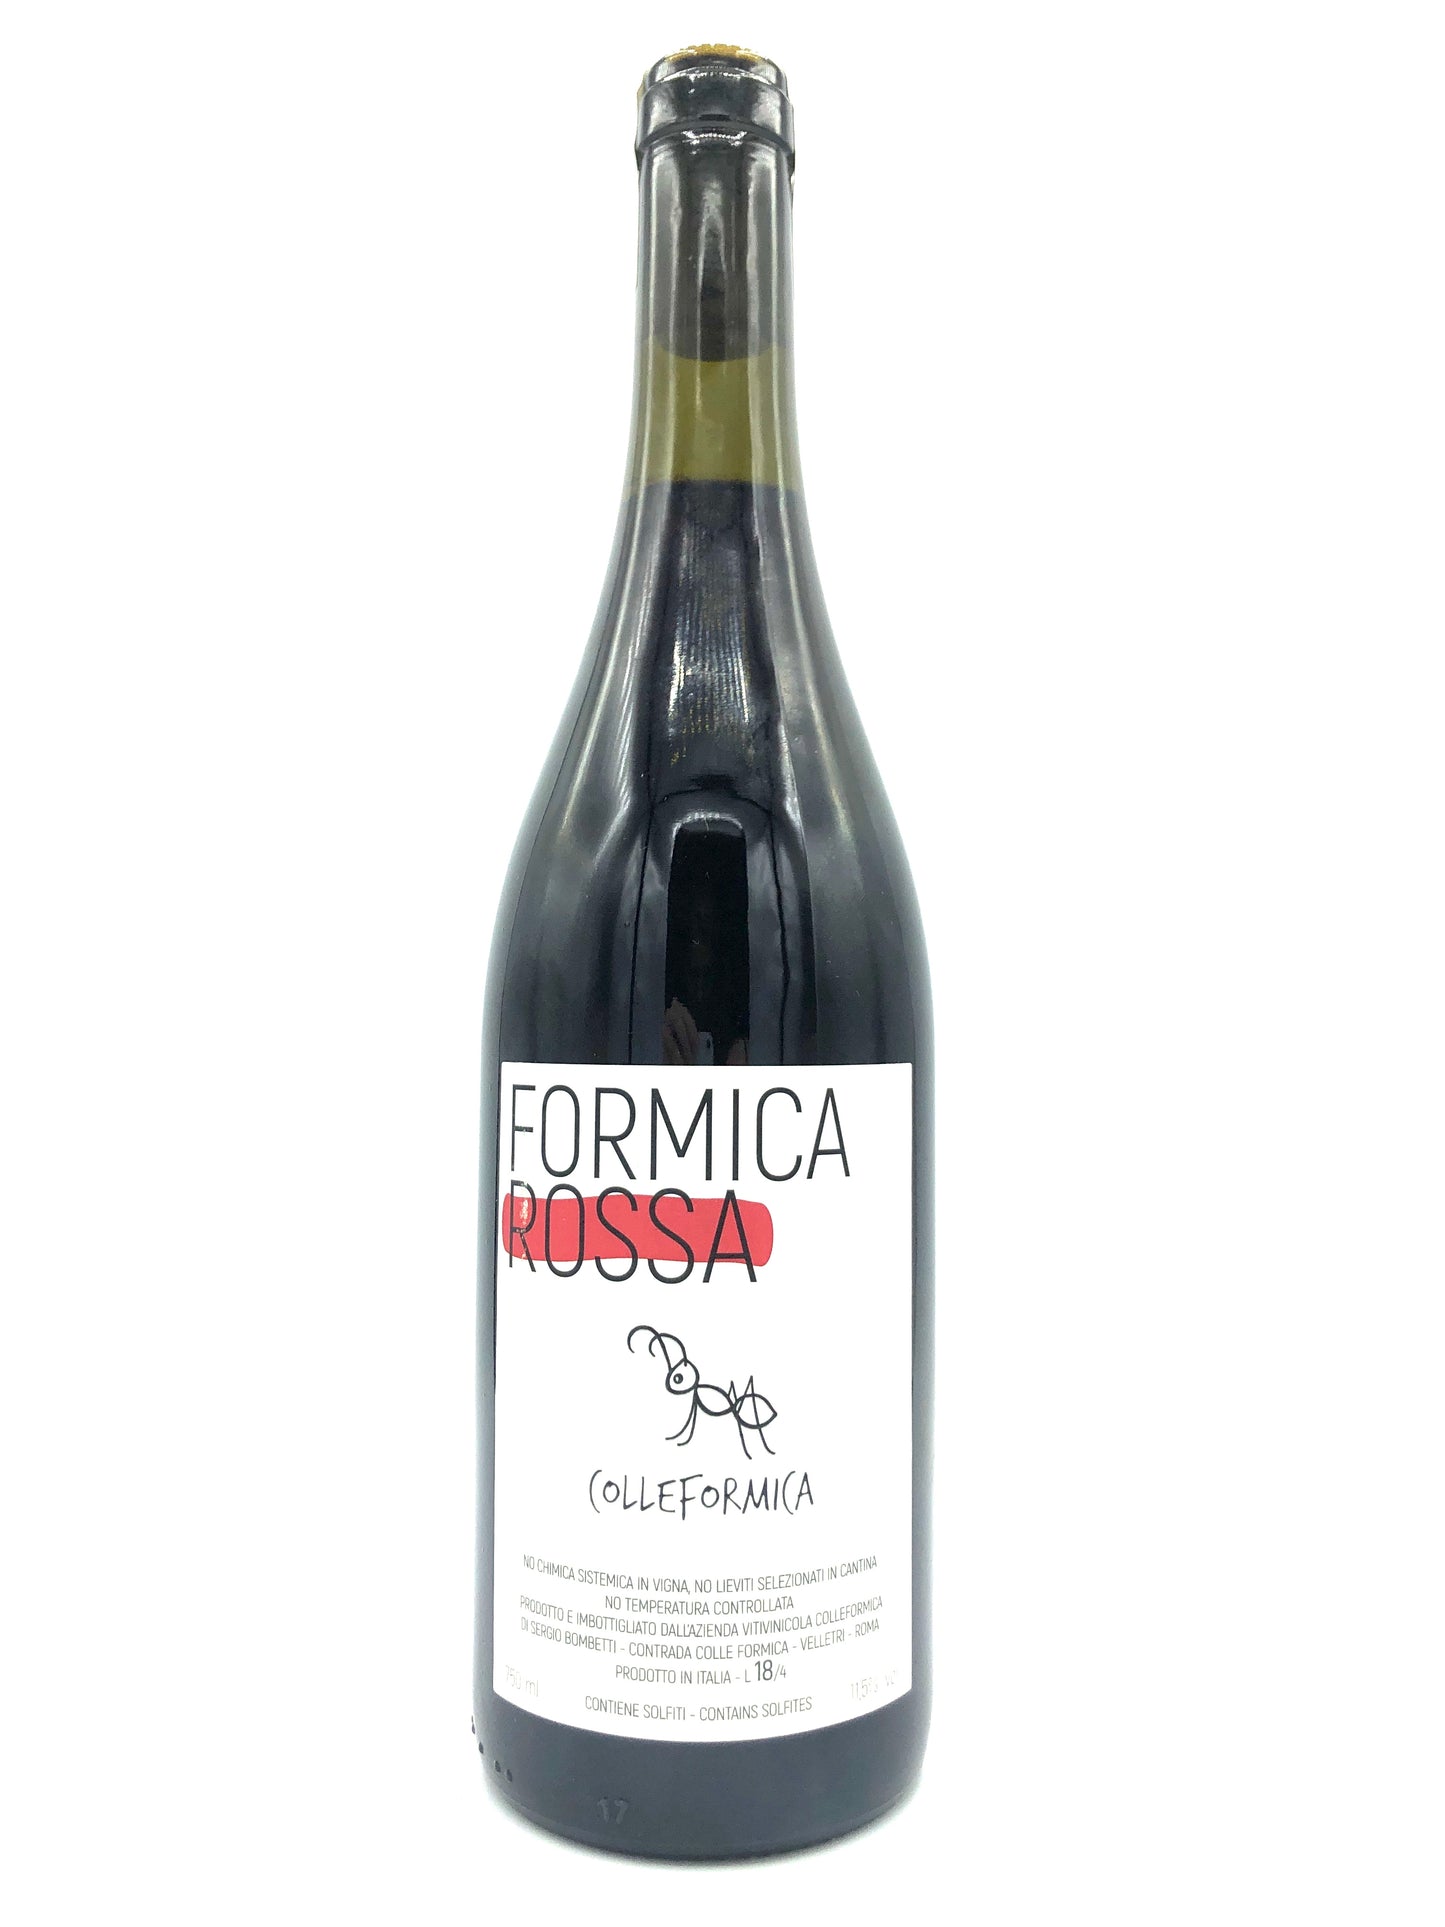 Colleformica 'Formica Rossa' 2019